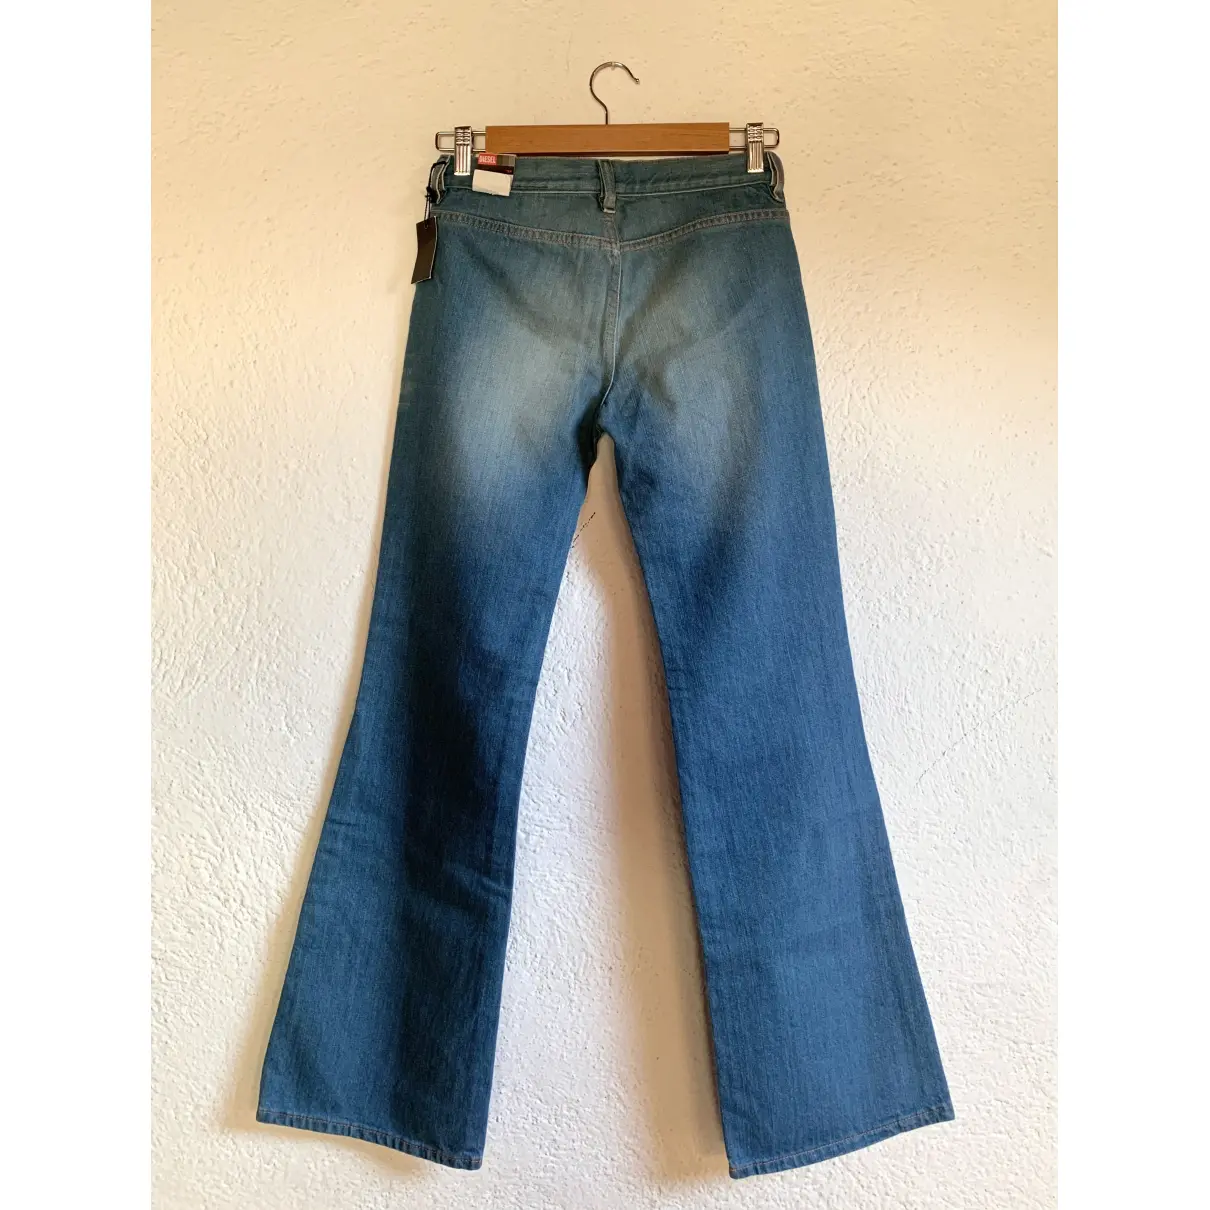 Buy Diesel Blue Cotton Jeans online